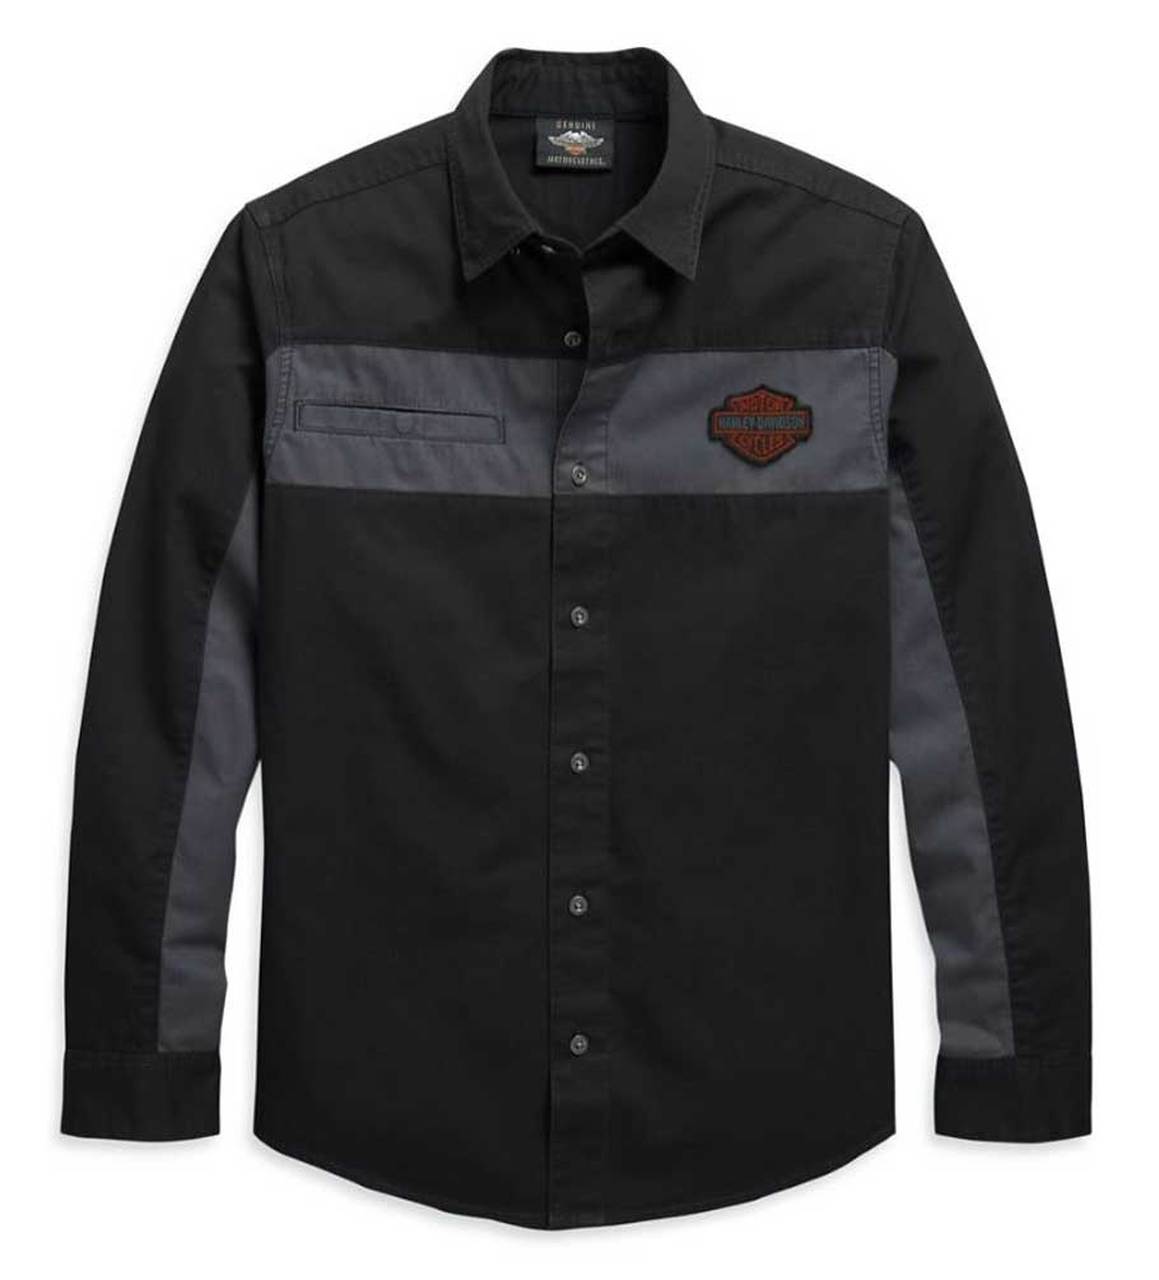 Harley-Davidson® Men’s Copperblock Long Sleeve Woven Shirt, Black